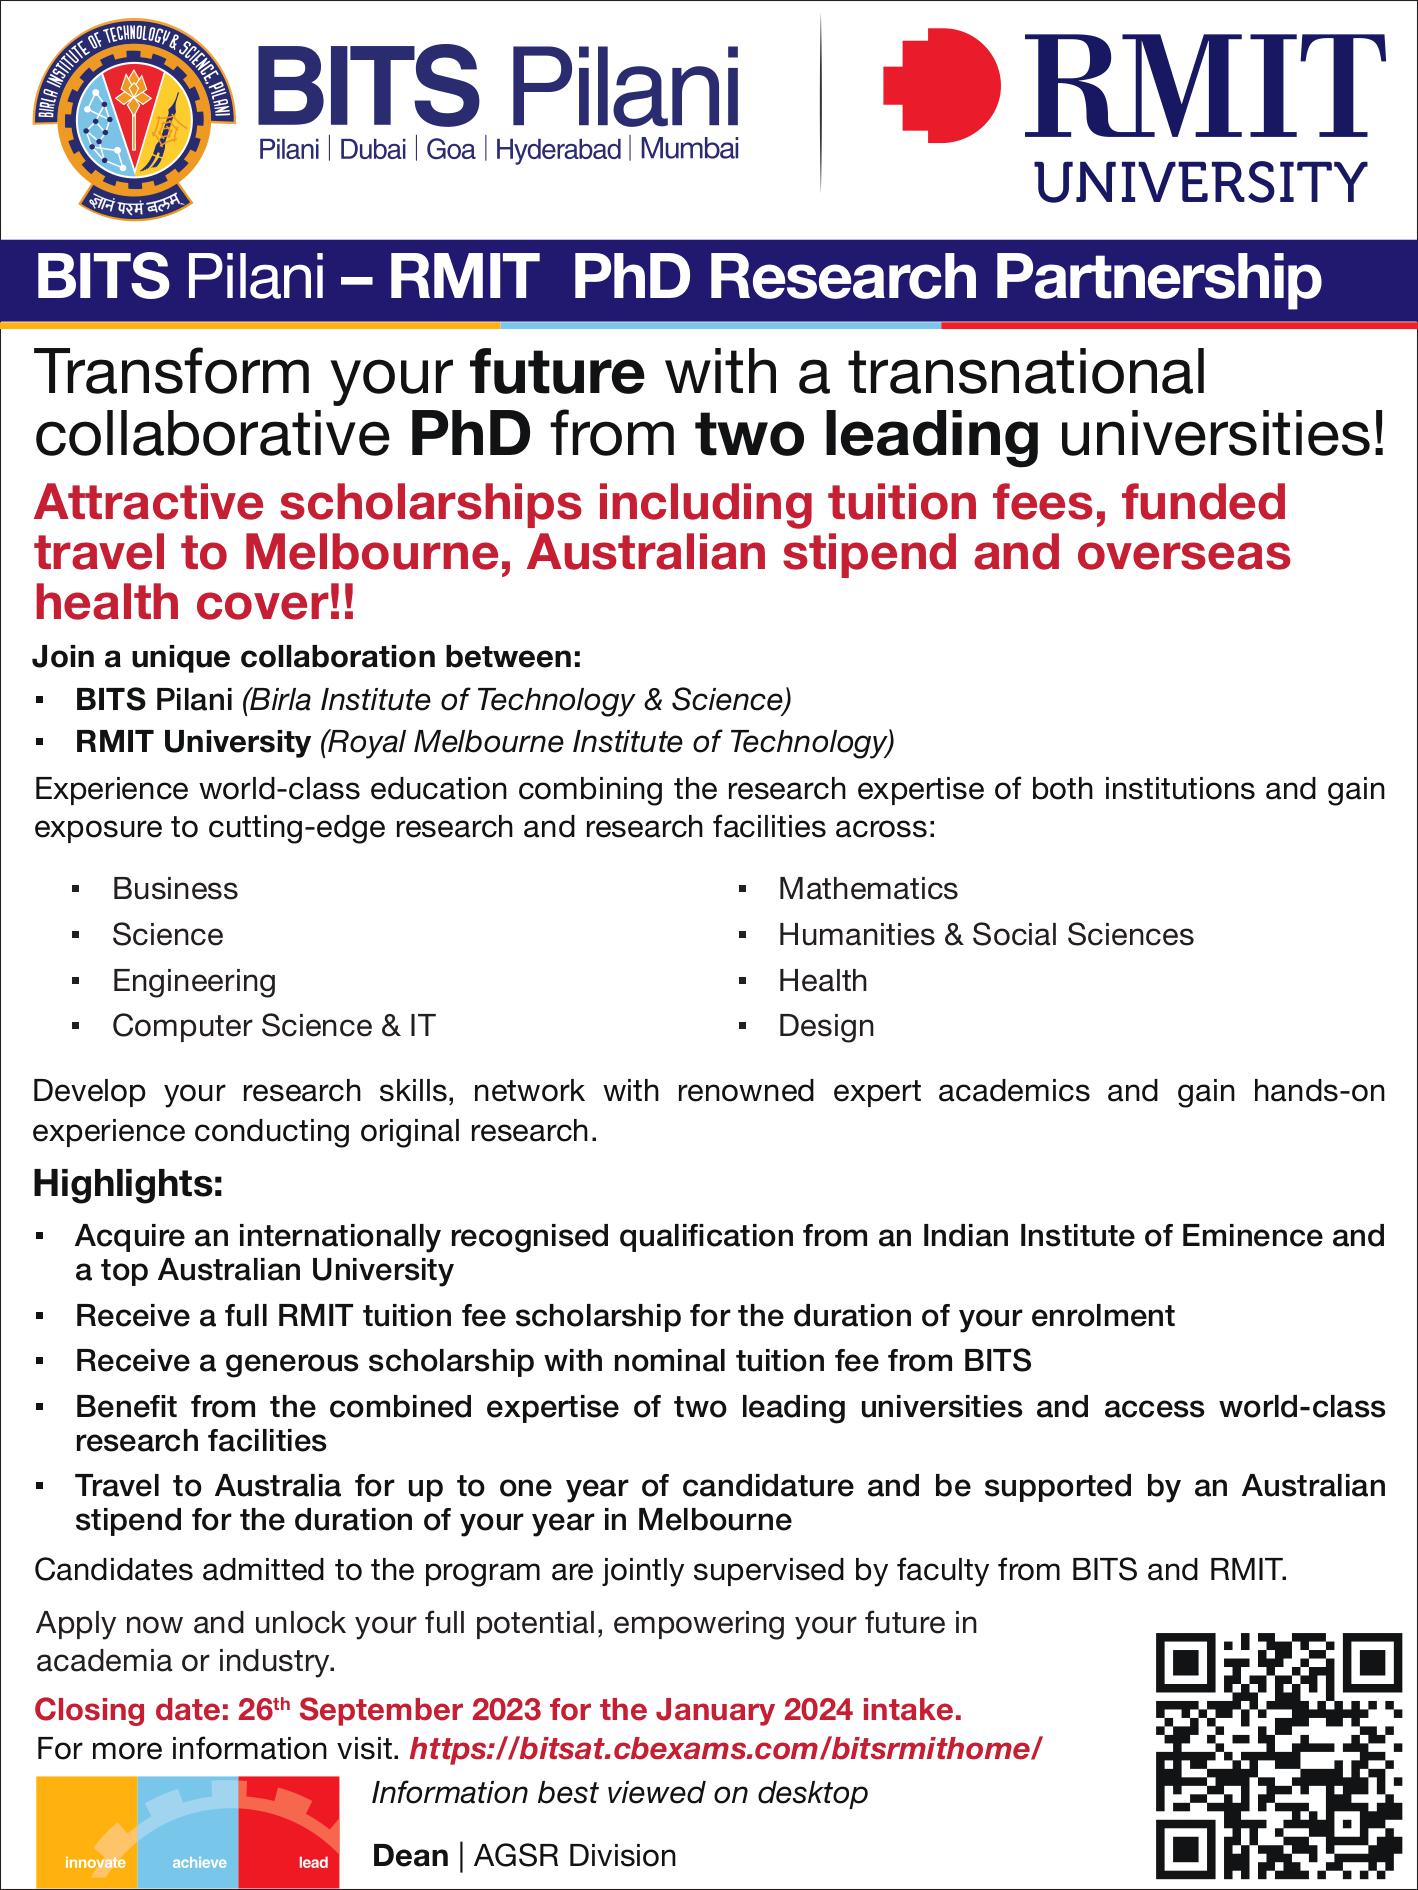 PhD_BITS_RMIT 2023__W12 X H16 cm_02 Sept 2023